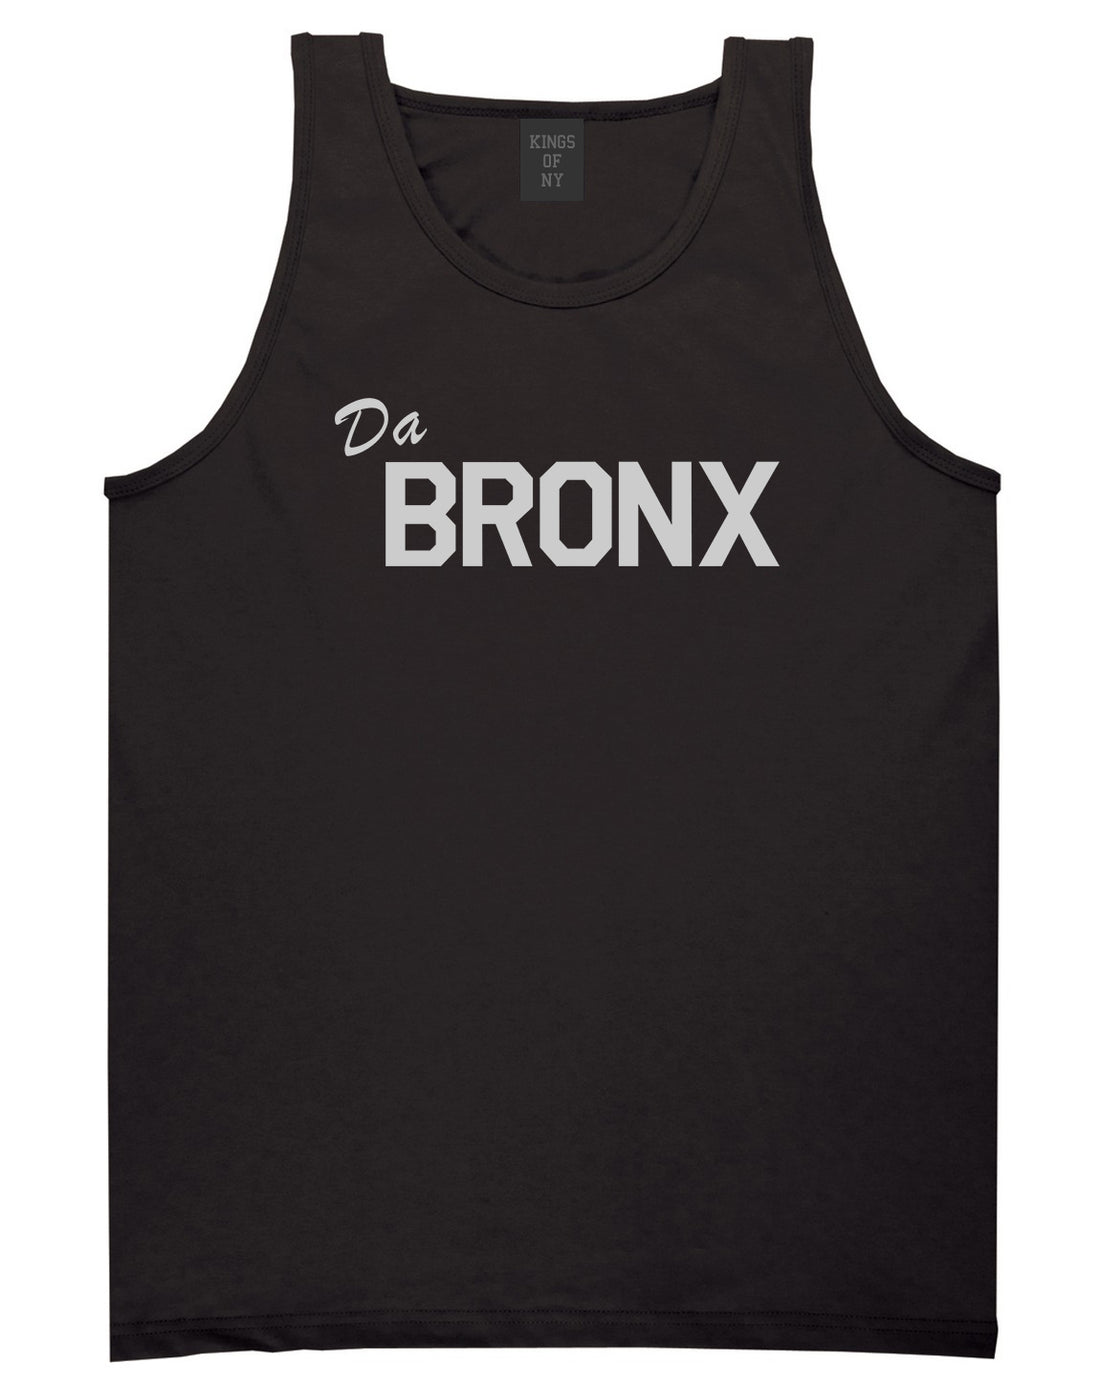 Da Bronx Mens Tank Top Shirt Black by Kings Of NY